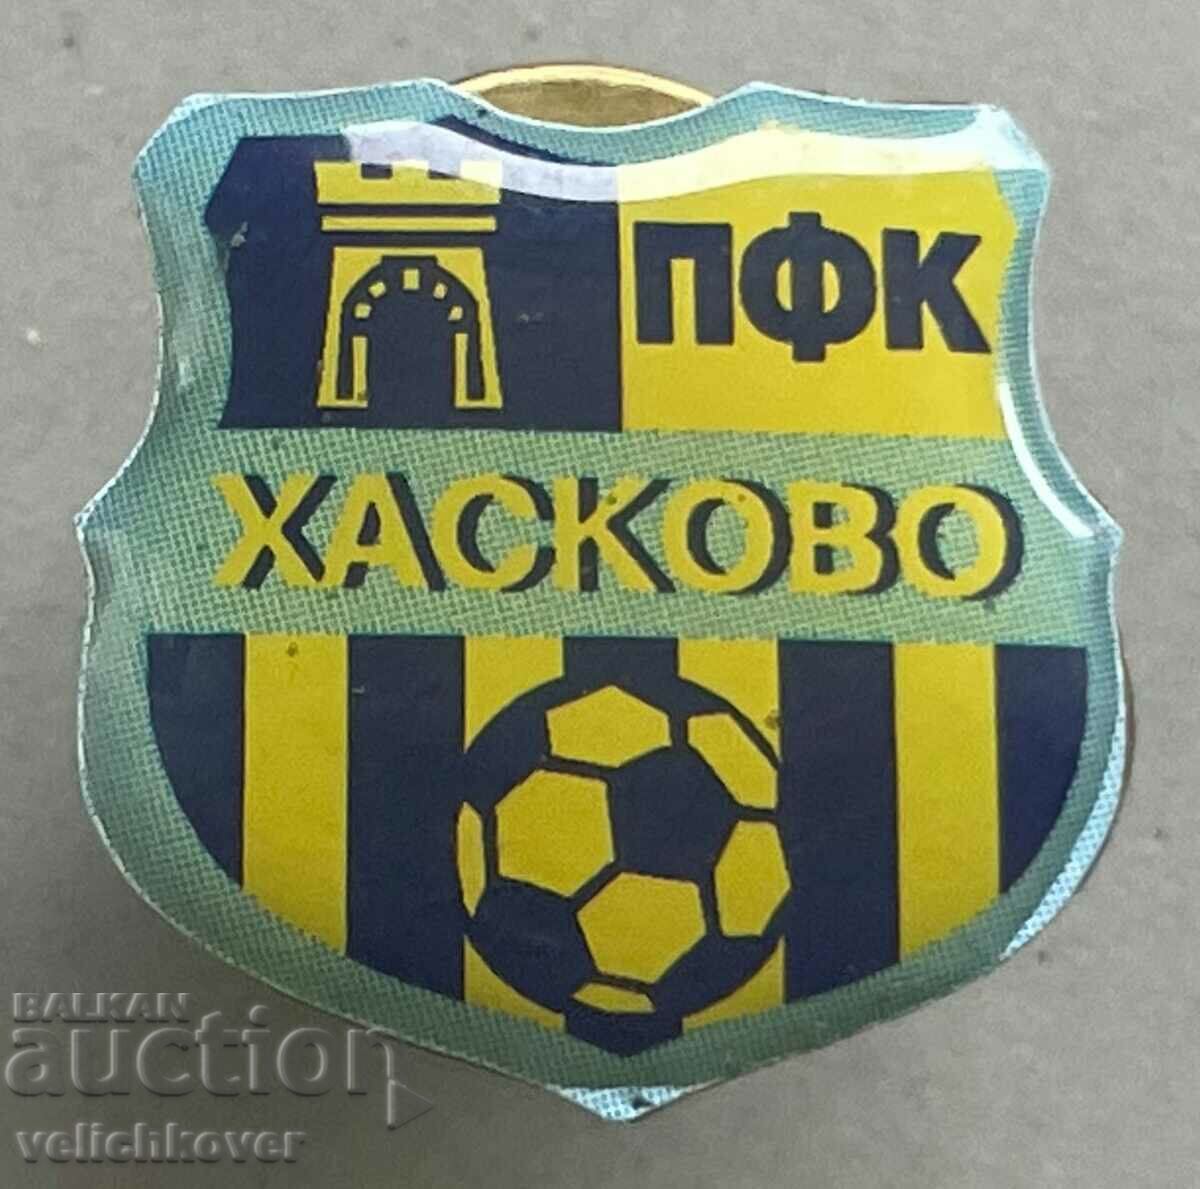 34911 Bulgaria sign football club Haskovo